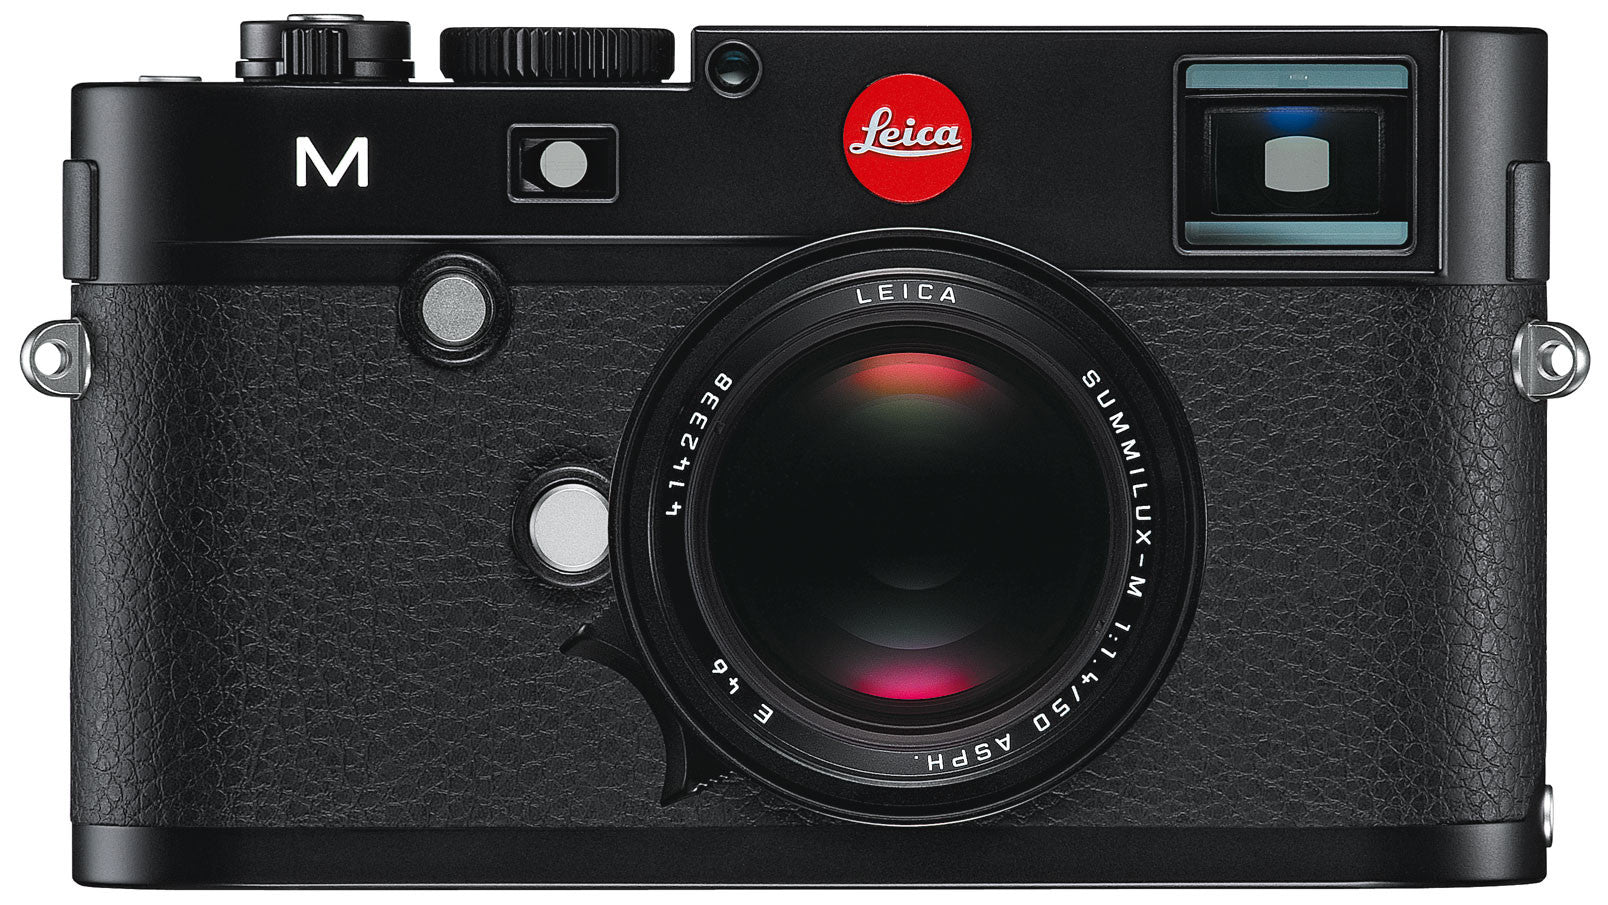 Leica M (Type 240) Digital Camera Black, camera mirrorless cameras, Leica - Pictureline  - 1